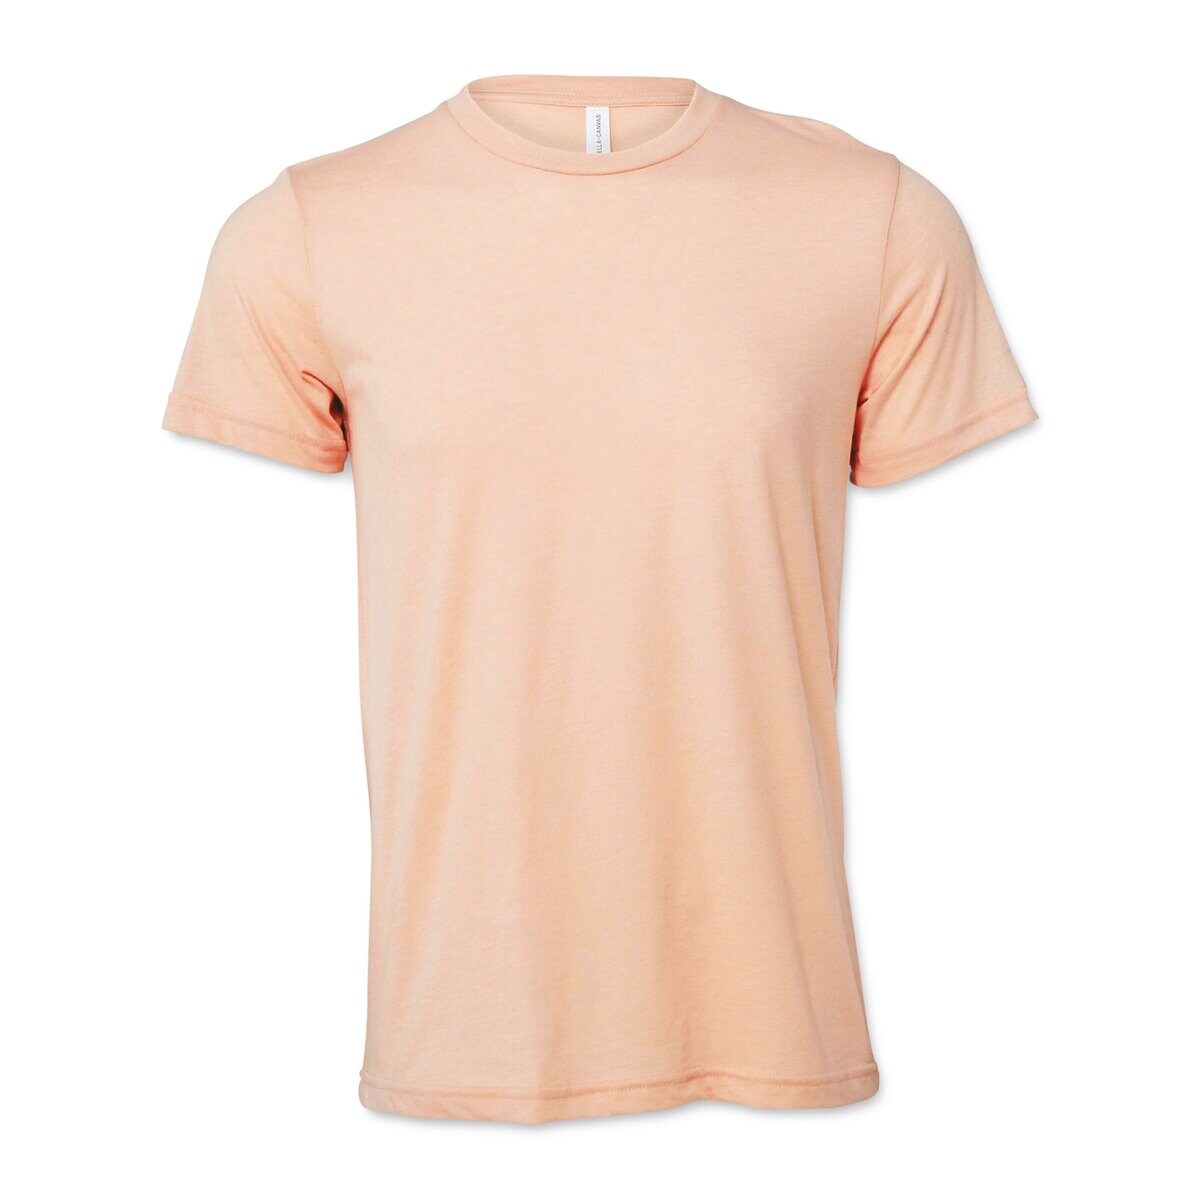 Bella Canvas Unisex T-shirt - Peach Heather, Large